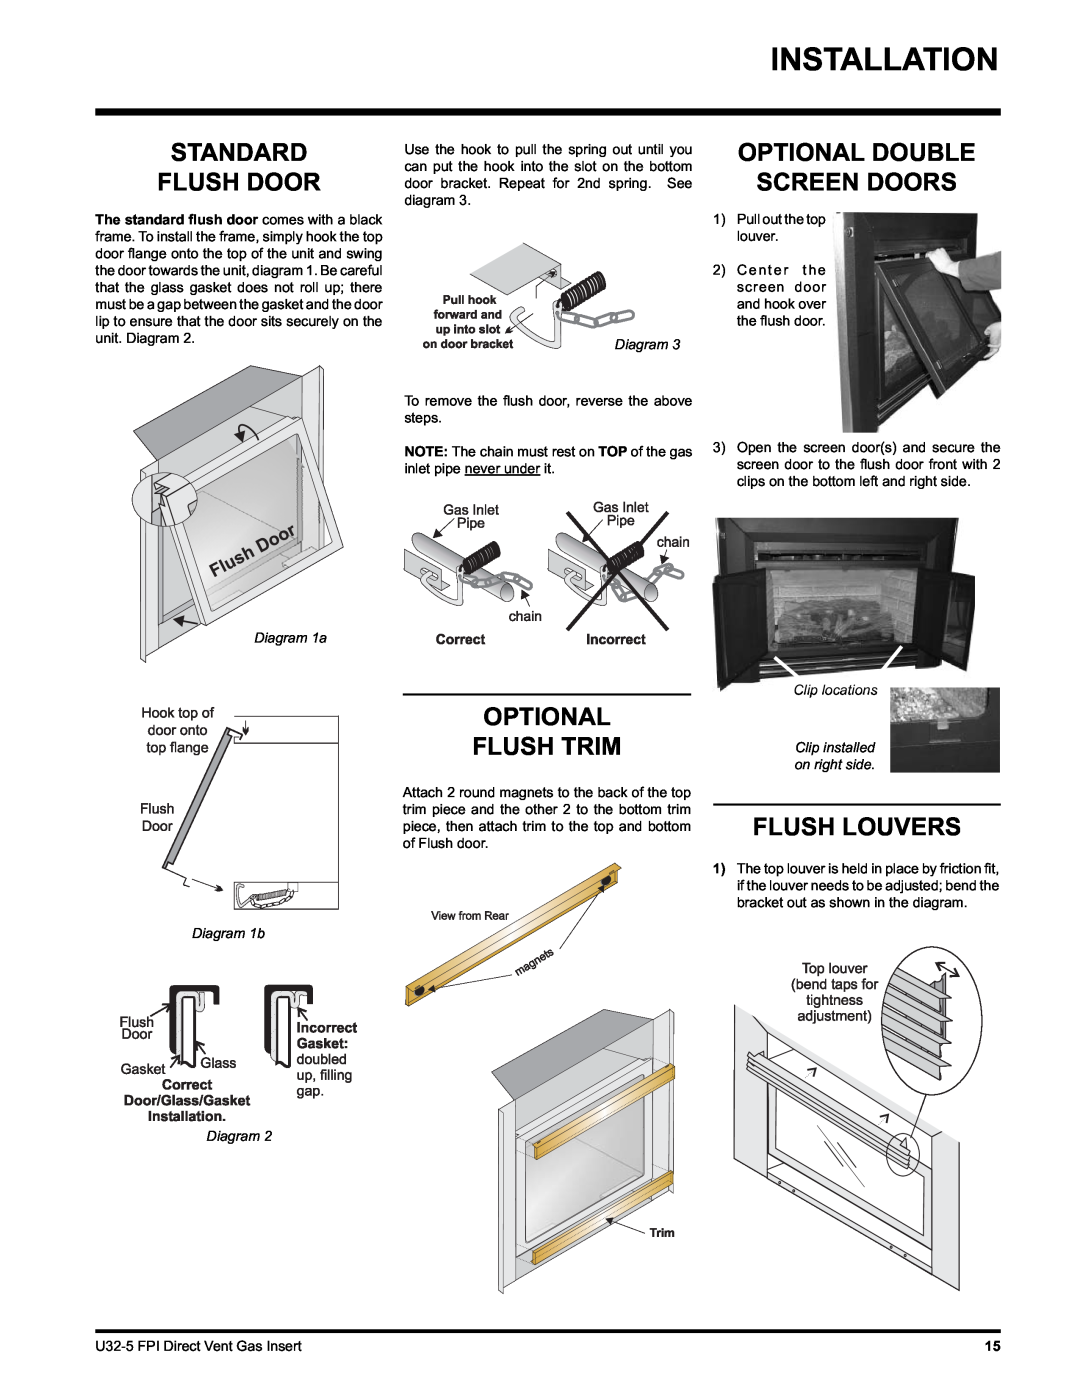 Hampton Direct U32 Installation, Standard Flush Door, Optional Double Screen Doors, Optional Flush Trim, Flush Louvers 